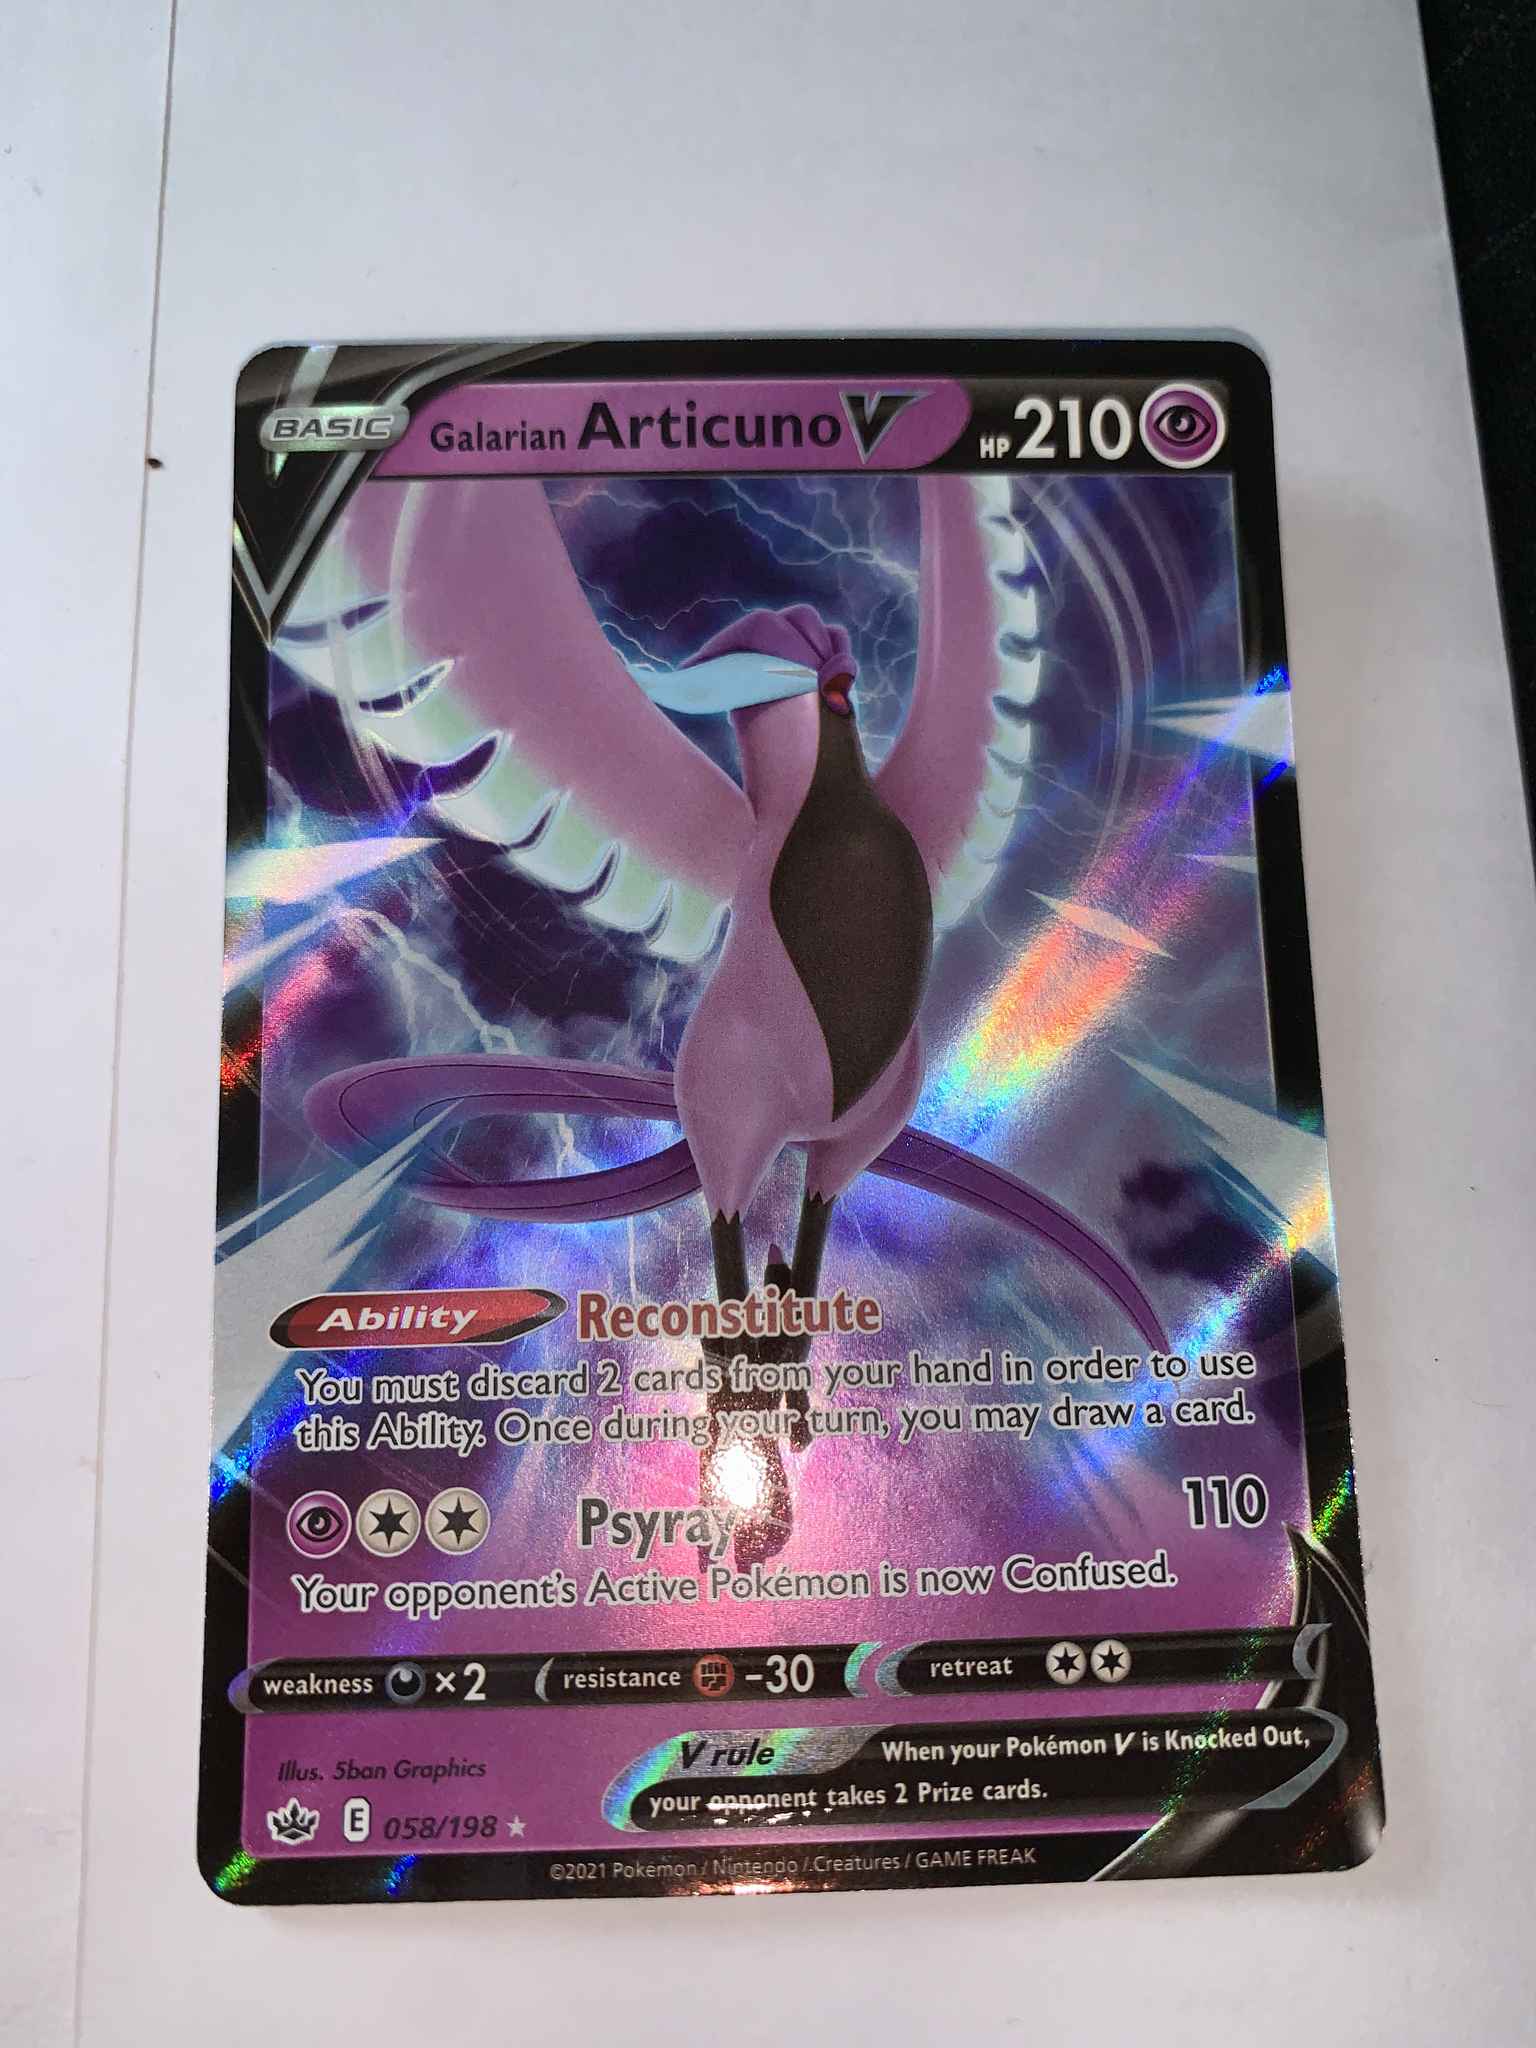 Galarian Articuno V 058/198 Chilling Reign NM Full Art Ultra Rare Pokemon Card